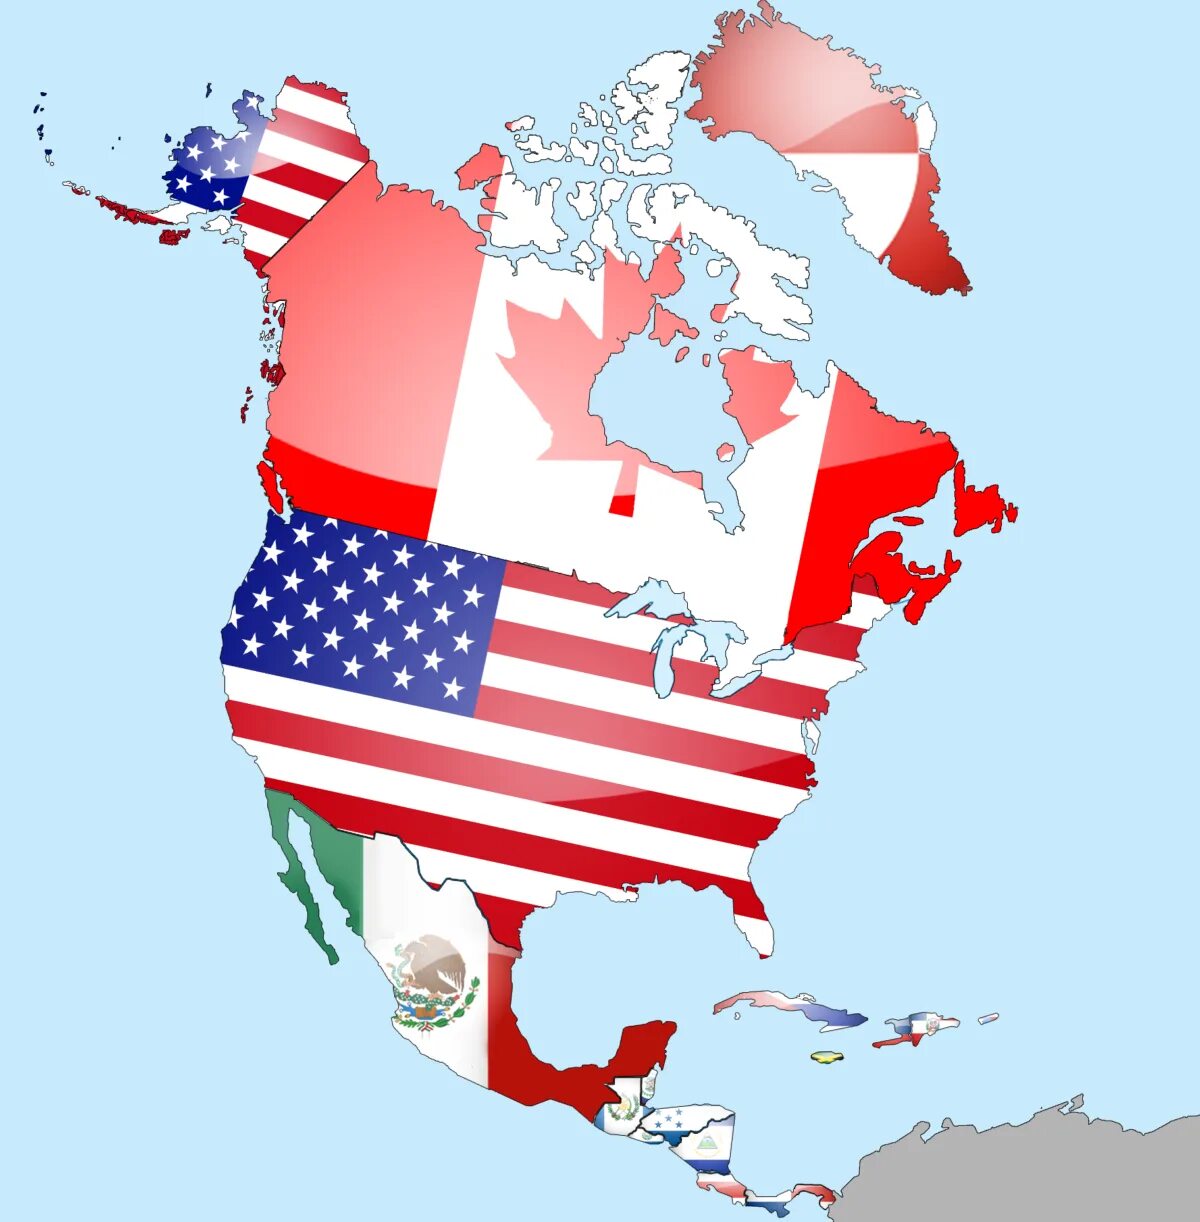 Страна на севере материка. Континент Северная Америка. Нортх Америка. Северная Америка материк США Канада. Североамериканский Континент на карте.